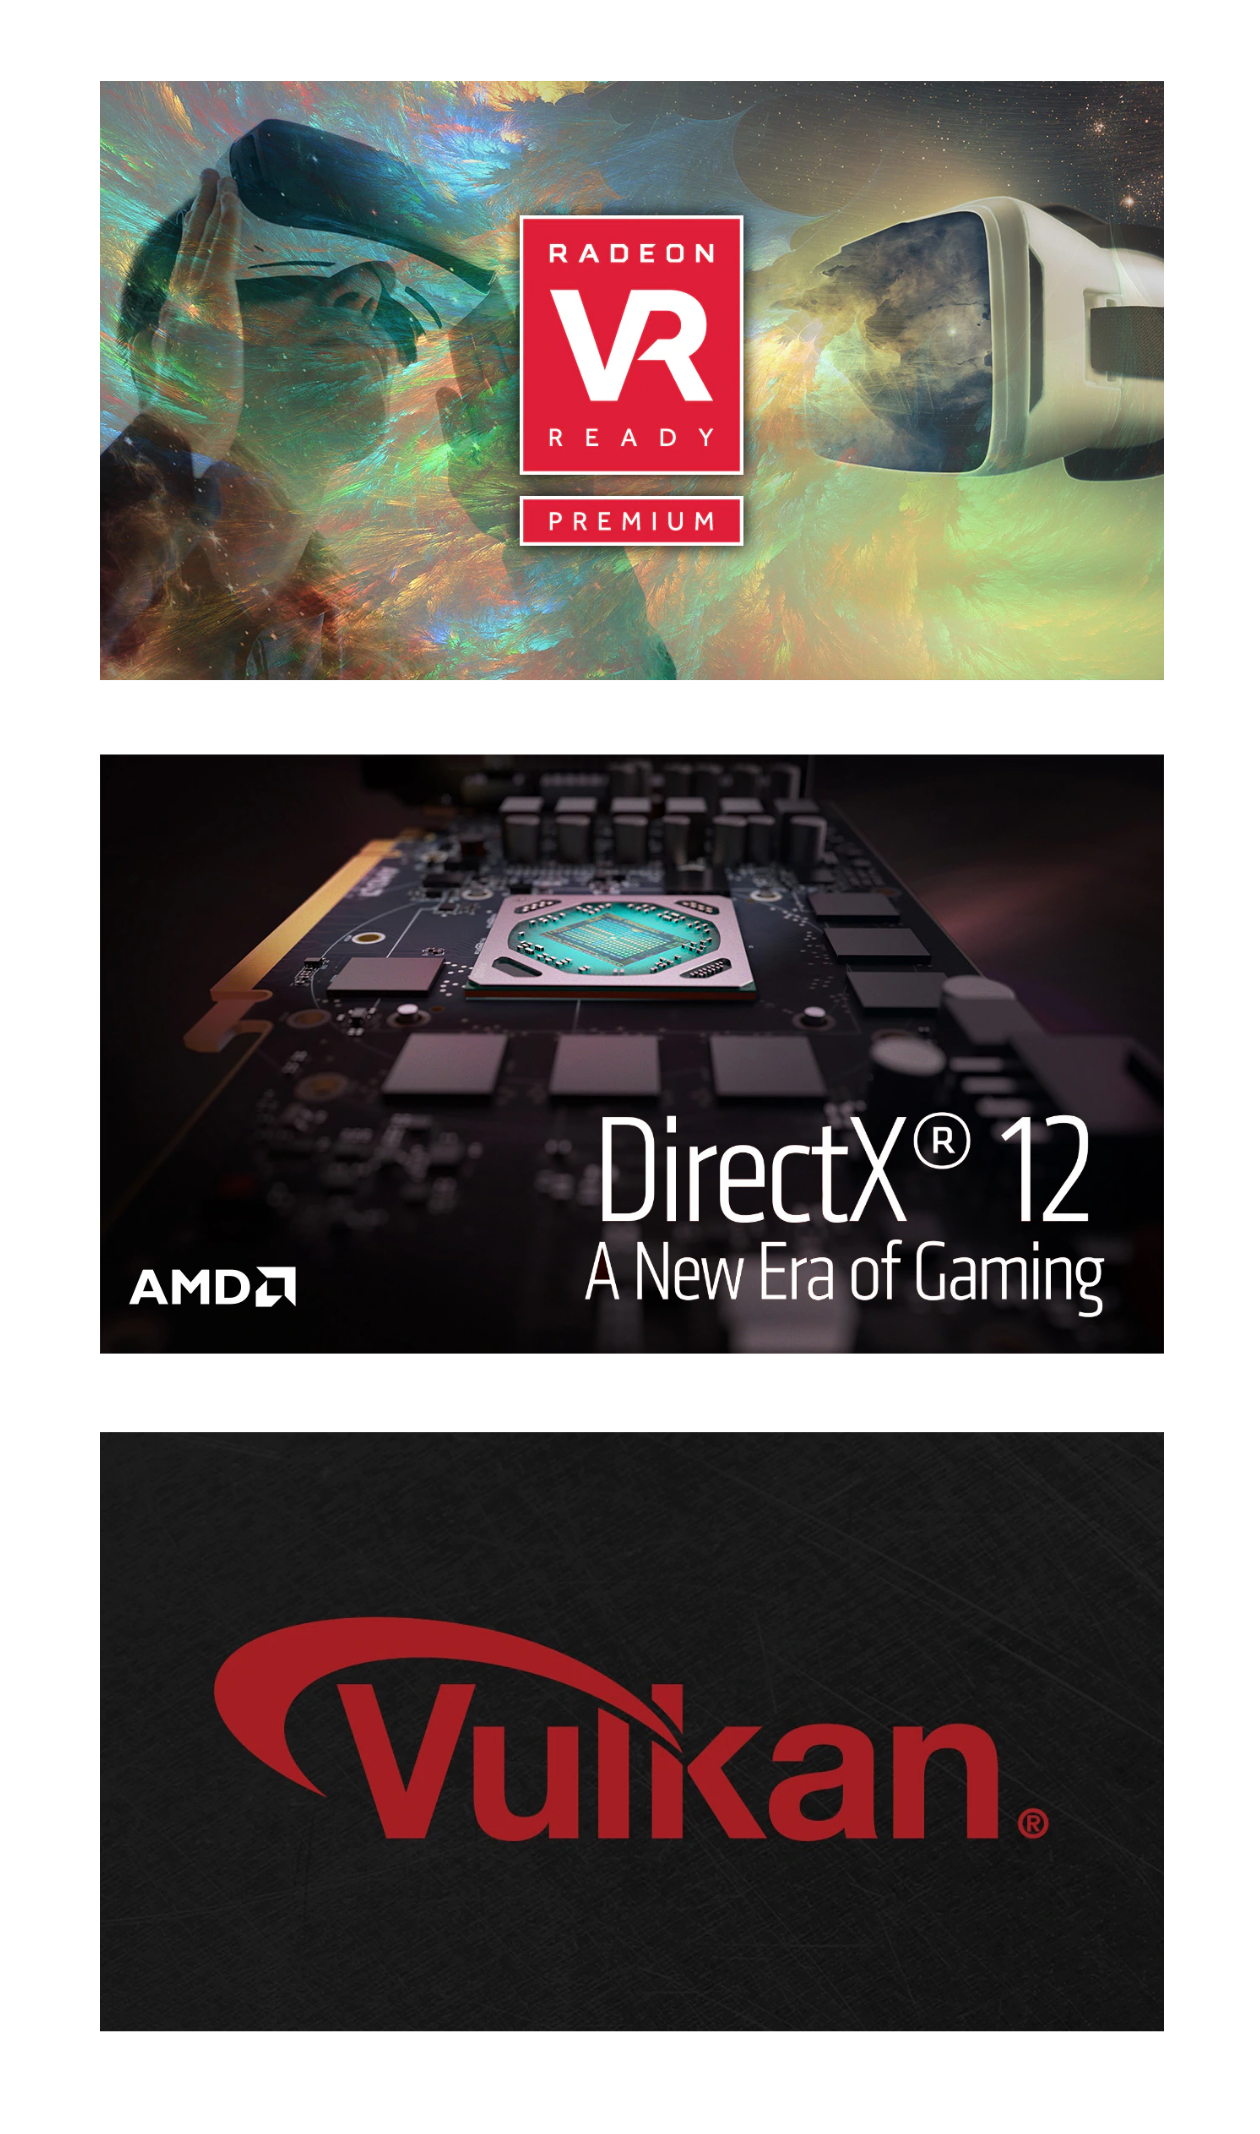 AMD VR, DirectX 12, and Vulkan logos